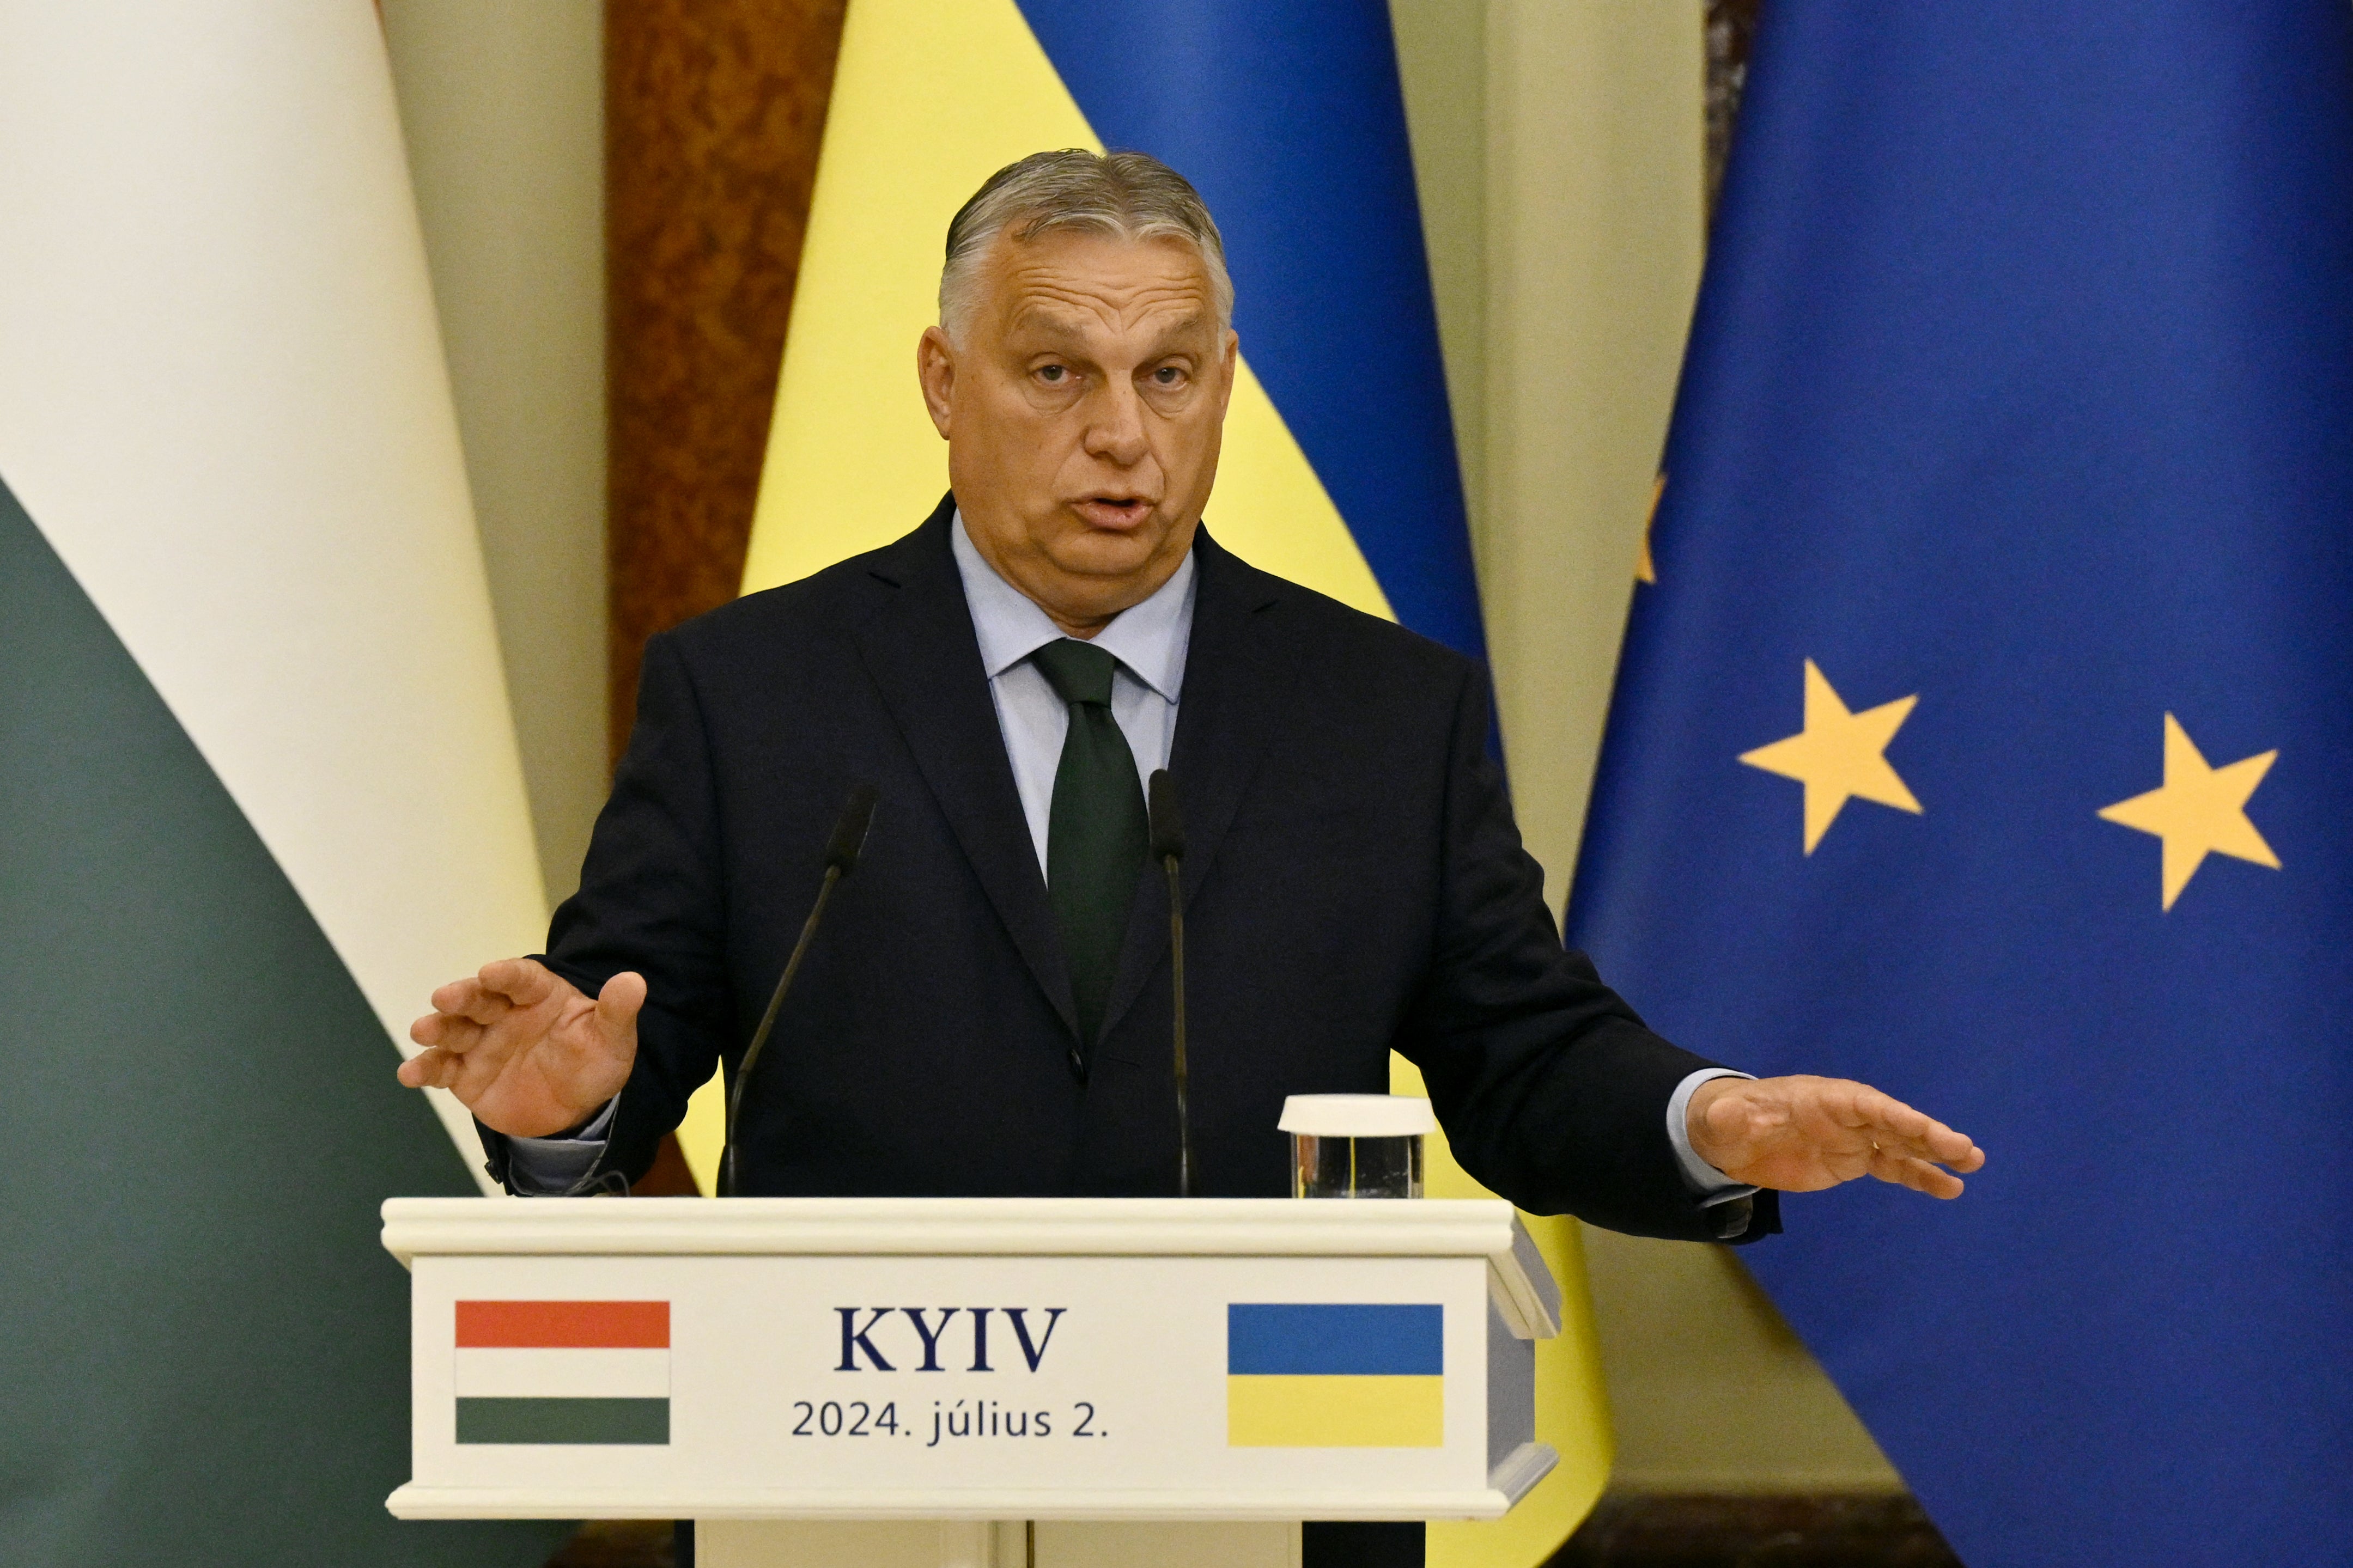 Hungarian Prime Minister Viktor Orban holds press conference with Ukrainian President in kyiv